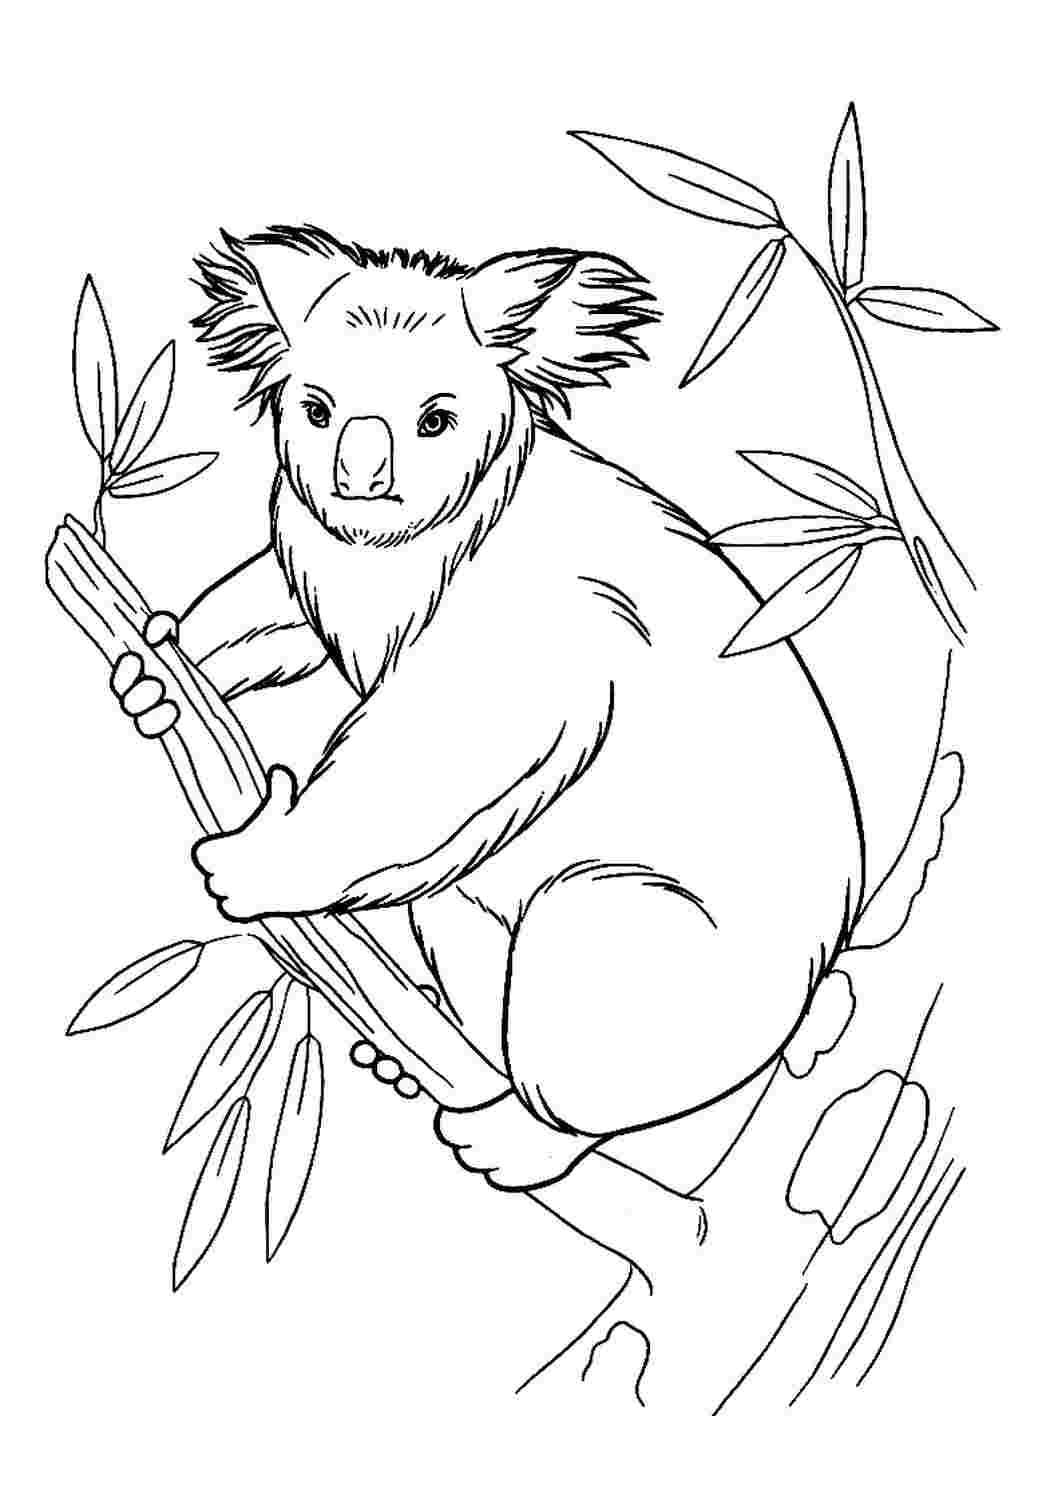 Раскраски Раскраска Раскраска коала на ветке распечатать. Онлайн раскраска. Раскраска Раскраска коала на ветке распечатать. Онлайн раскраски.